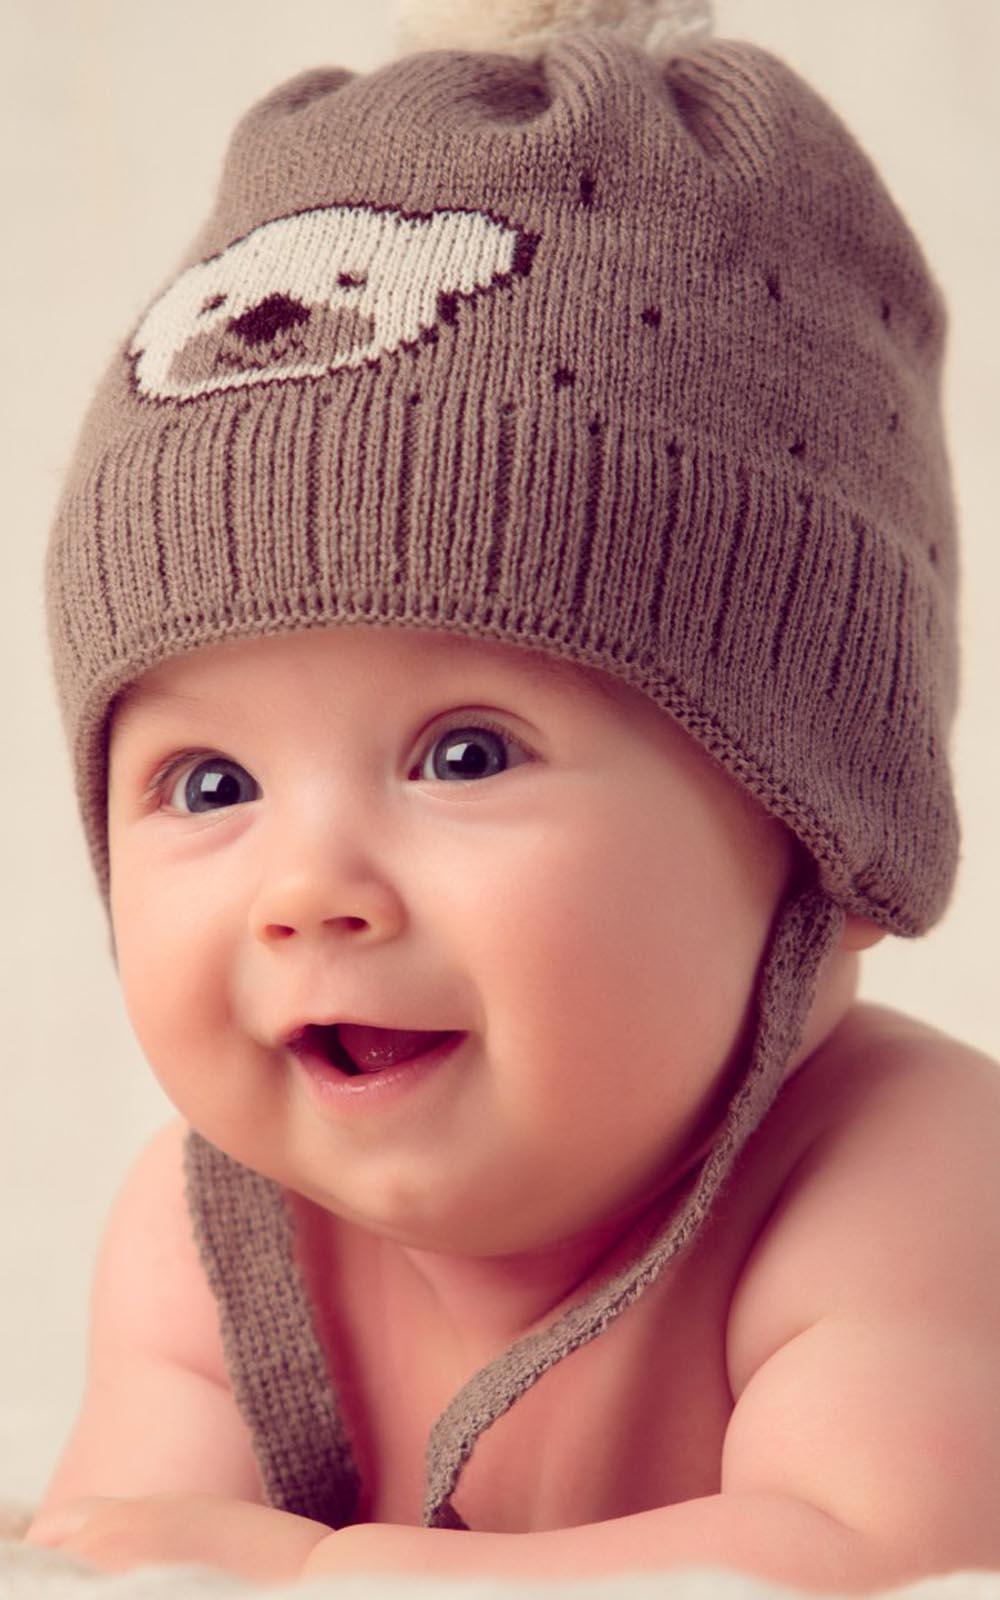 Cute Baby With Cute Hat Cap 4K Ultra HD Mobile Wallpaper